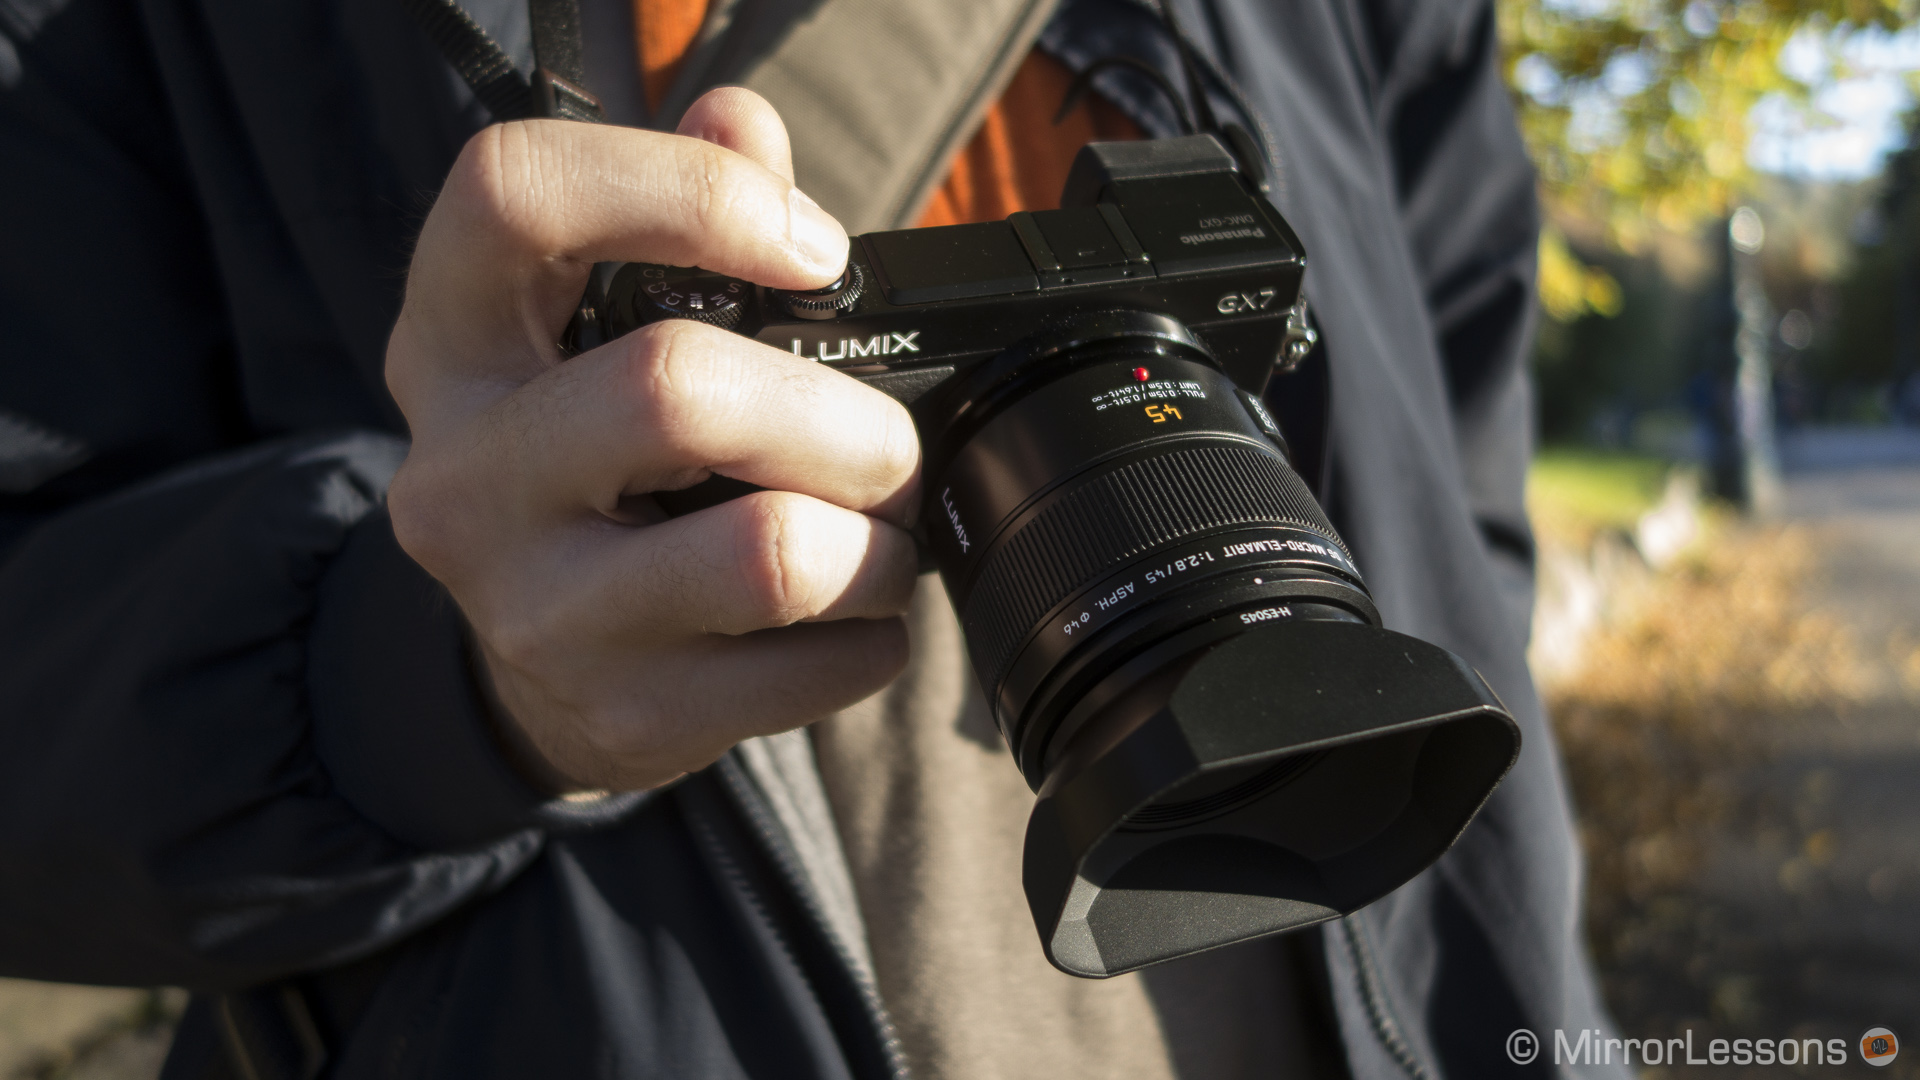 Cataract agenda rek The Panasonic GX7 & Leica 45mm f/2.8 Macro: An excellent combo!